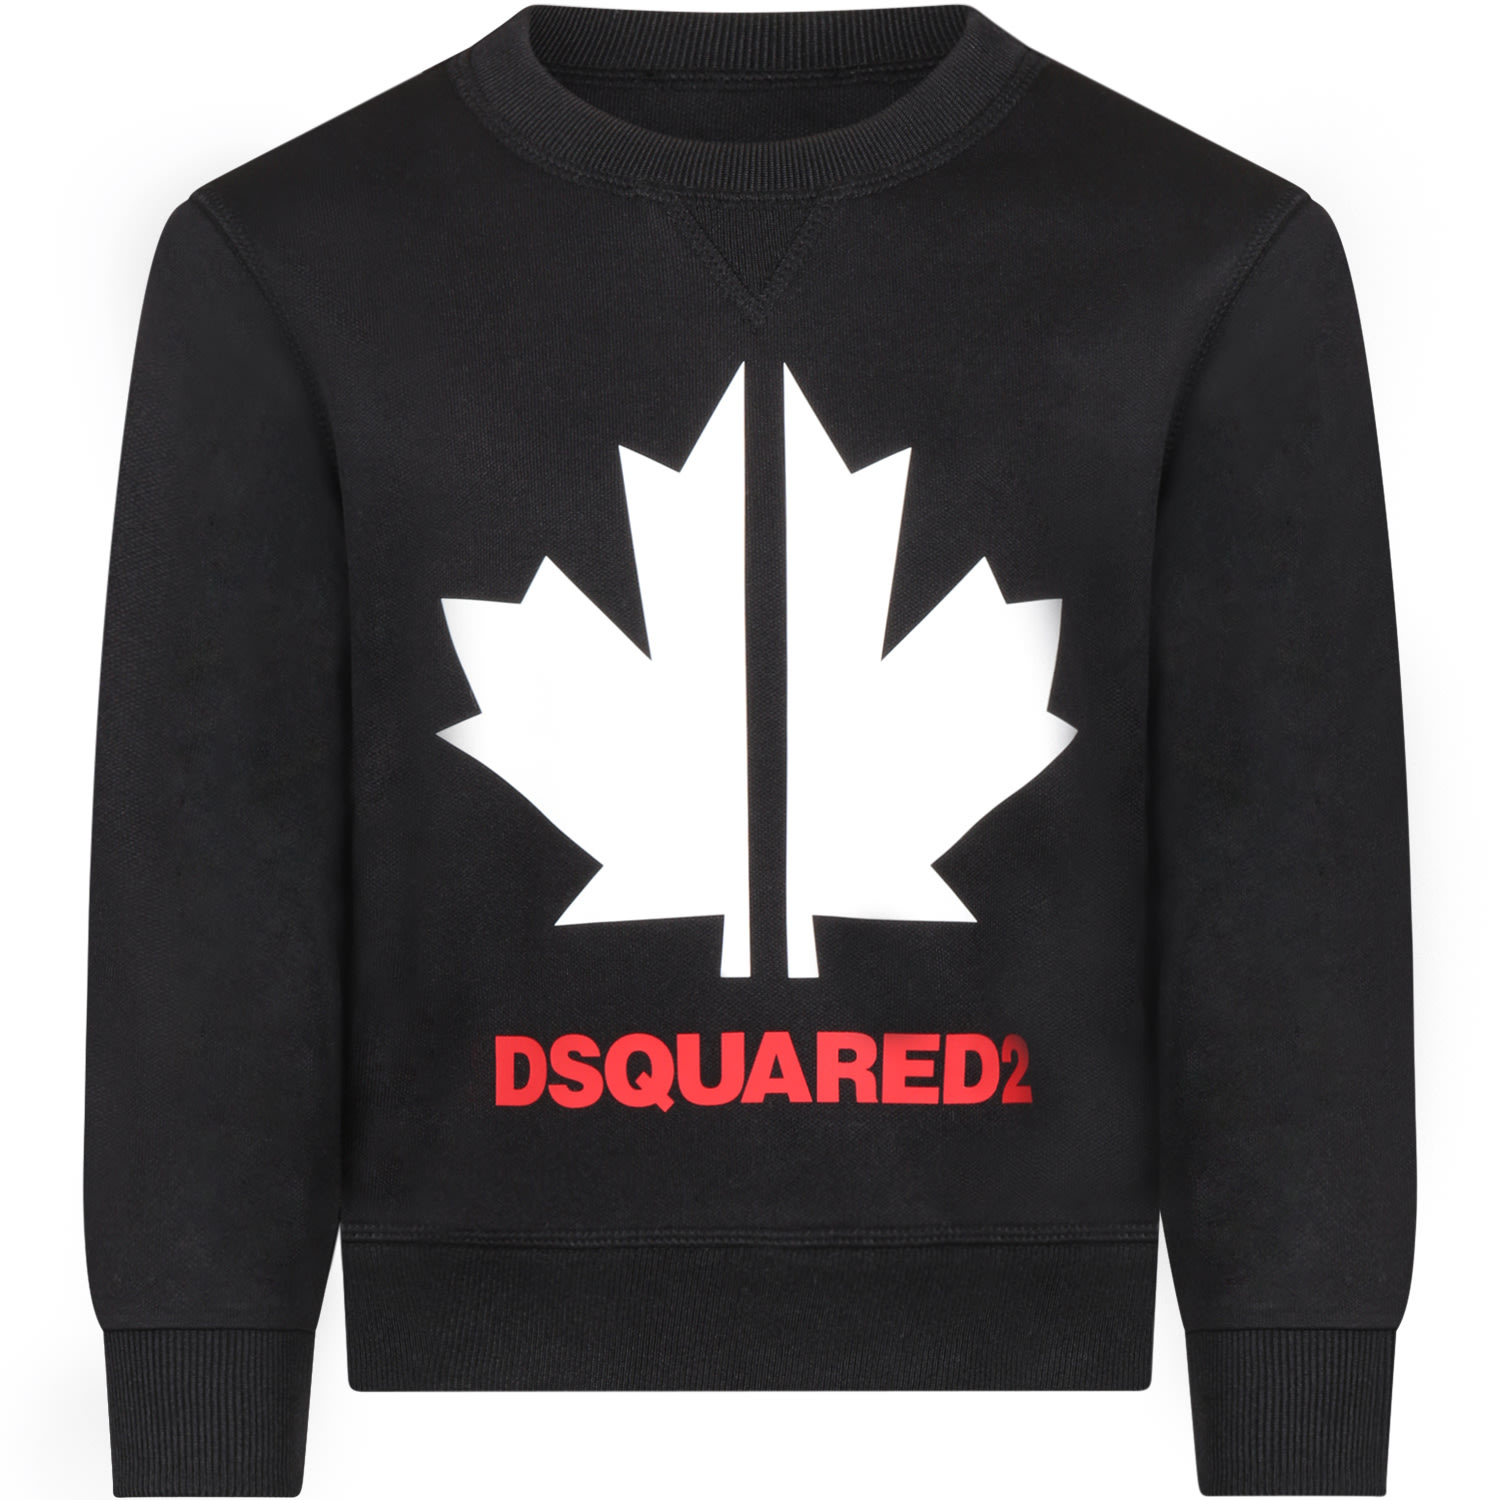 Dsquared2 Black Sweatshirt For Boy With Maple Leaf